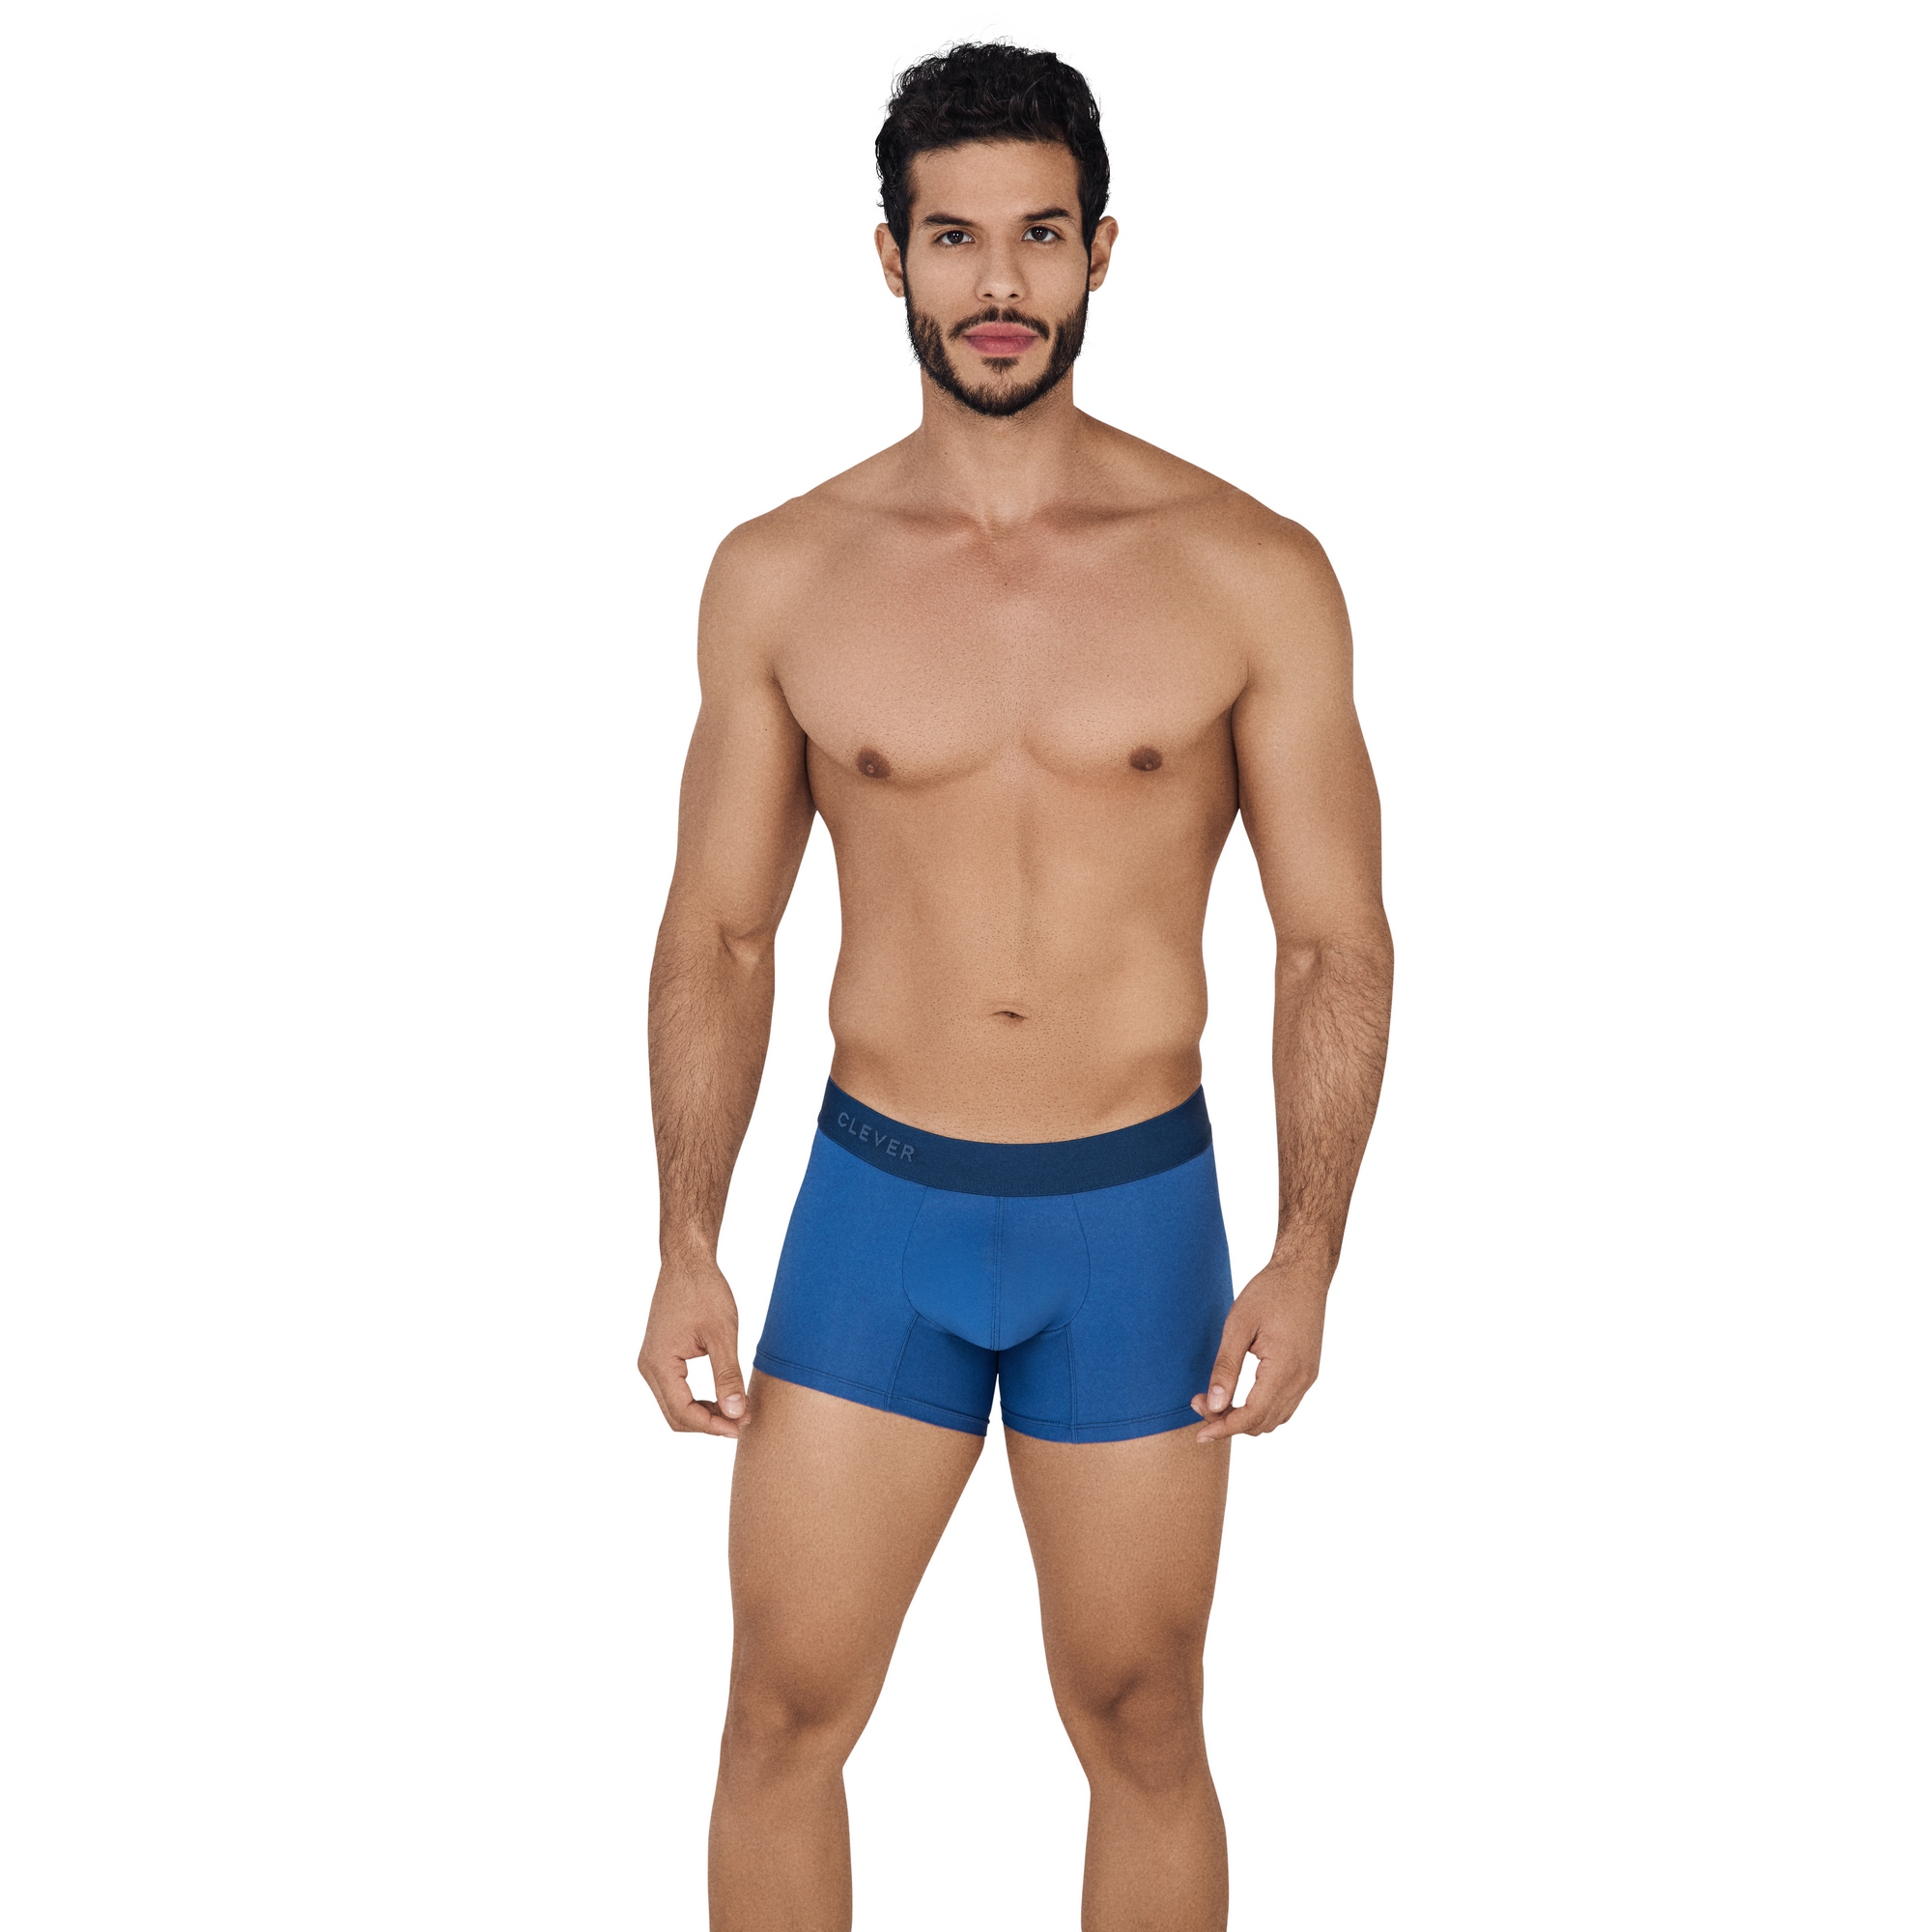 Трусы мужские Clever Masculine Underwear 0532 синие S